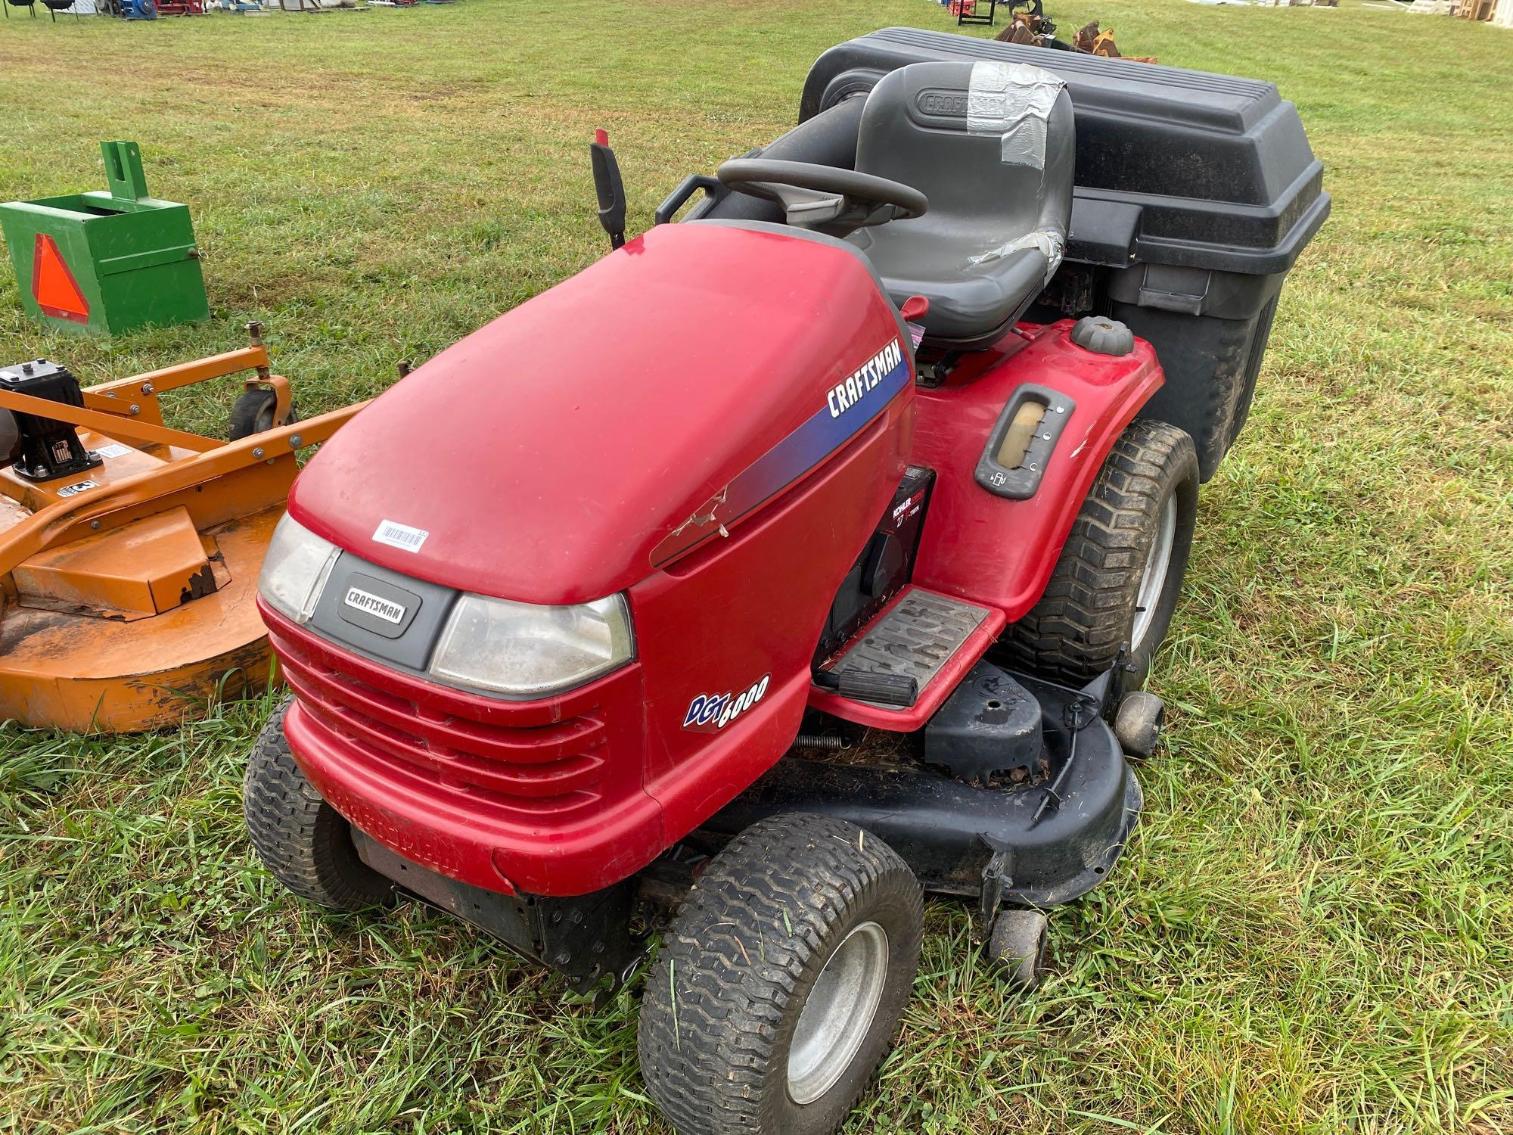 Image for Craftsman DGT 6000 Lawn Mower